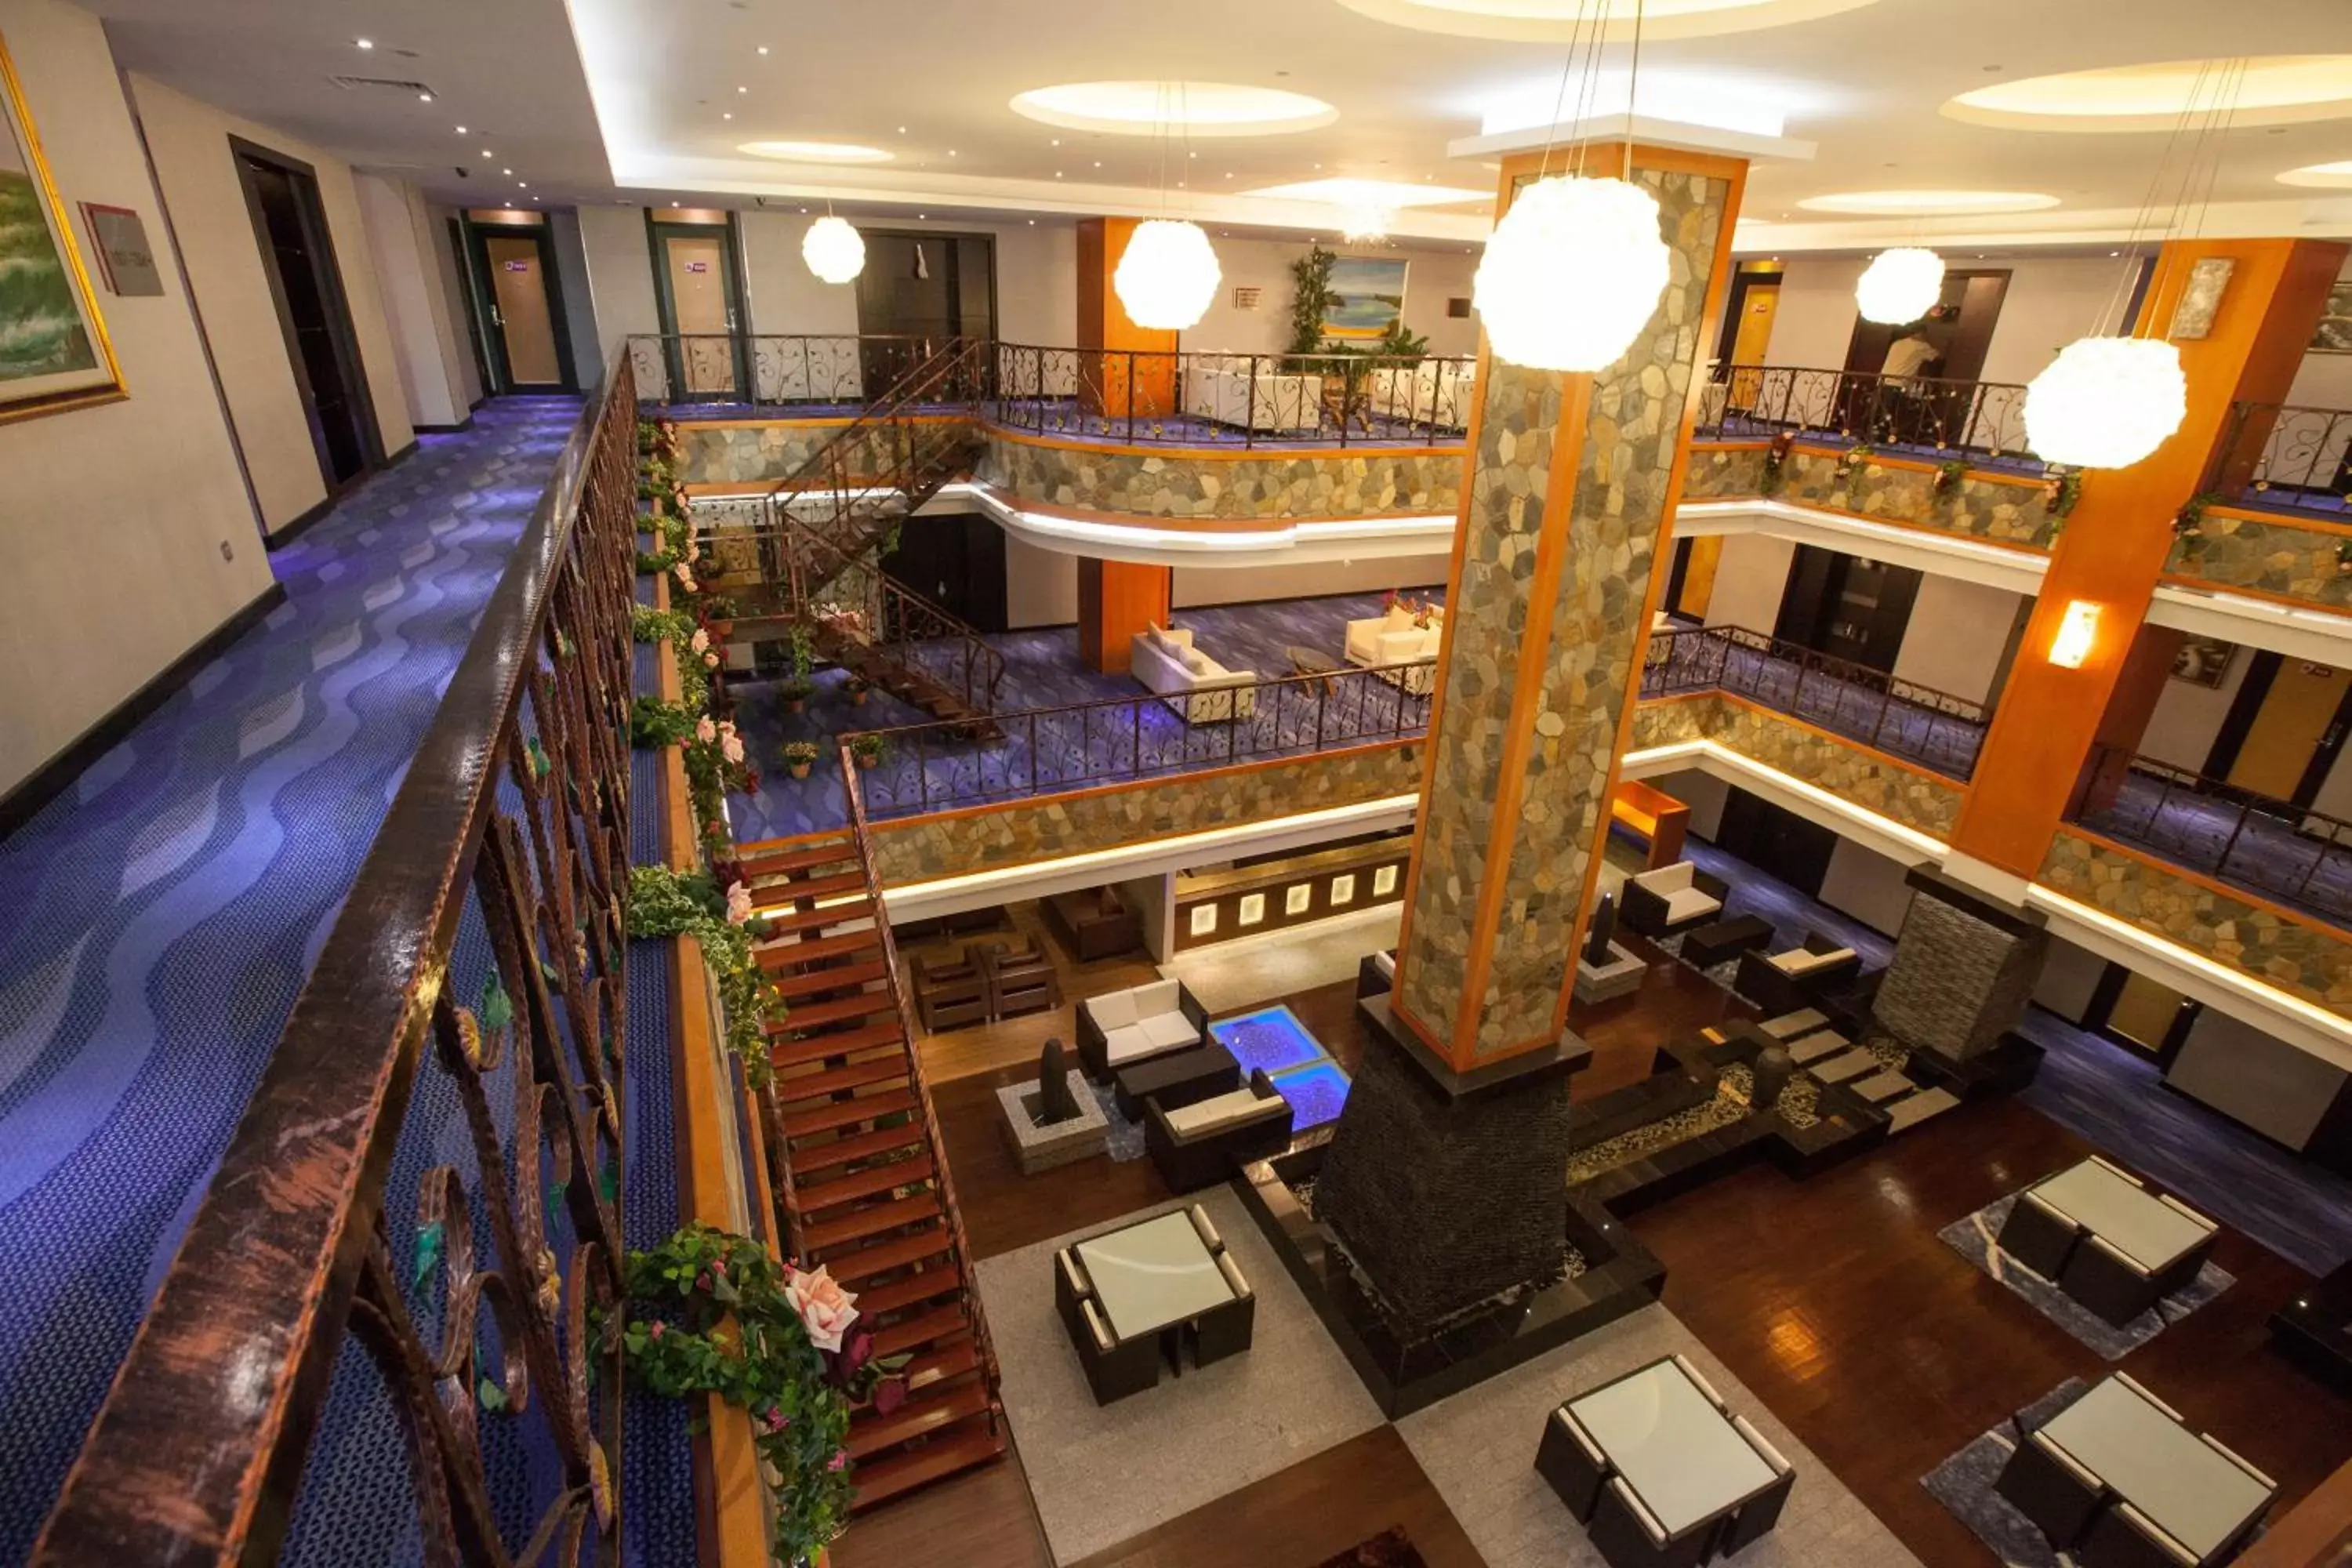 Lobby or reception in Meritz Hotel